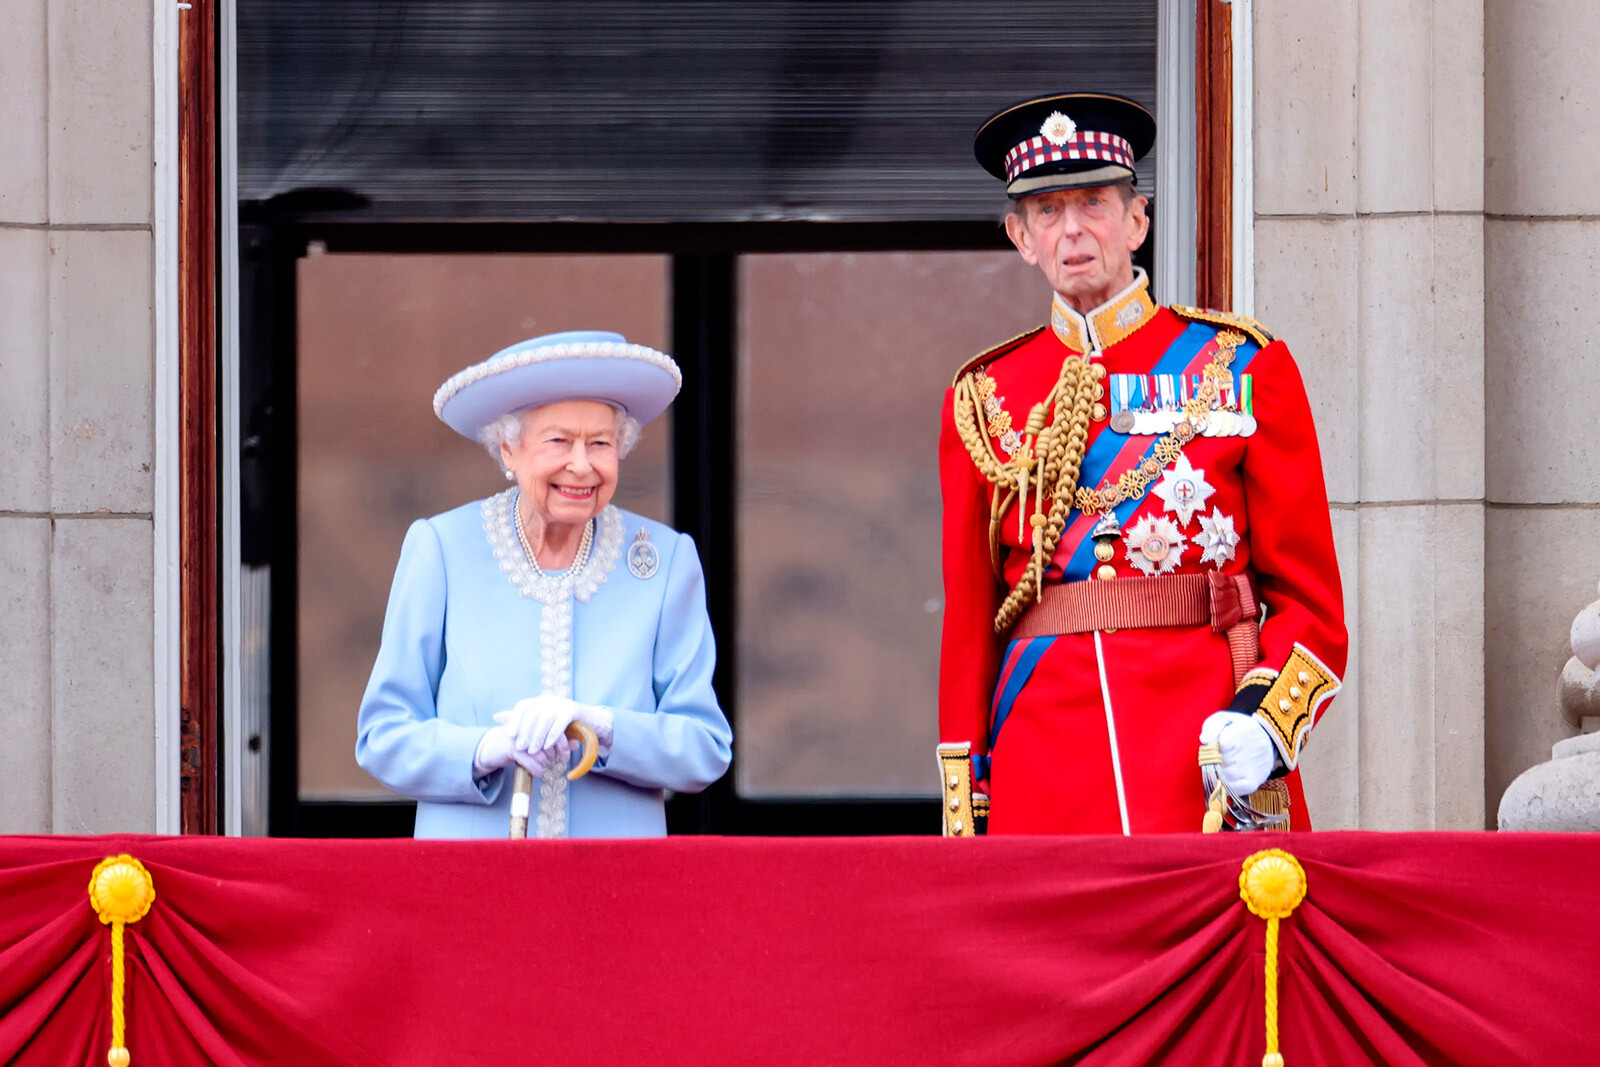 Королева Елизавета II и принц Эдвард, герцог Кентский на балконе Букингемского дворца, 2022